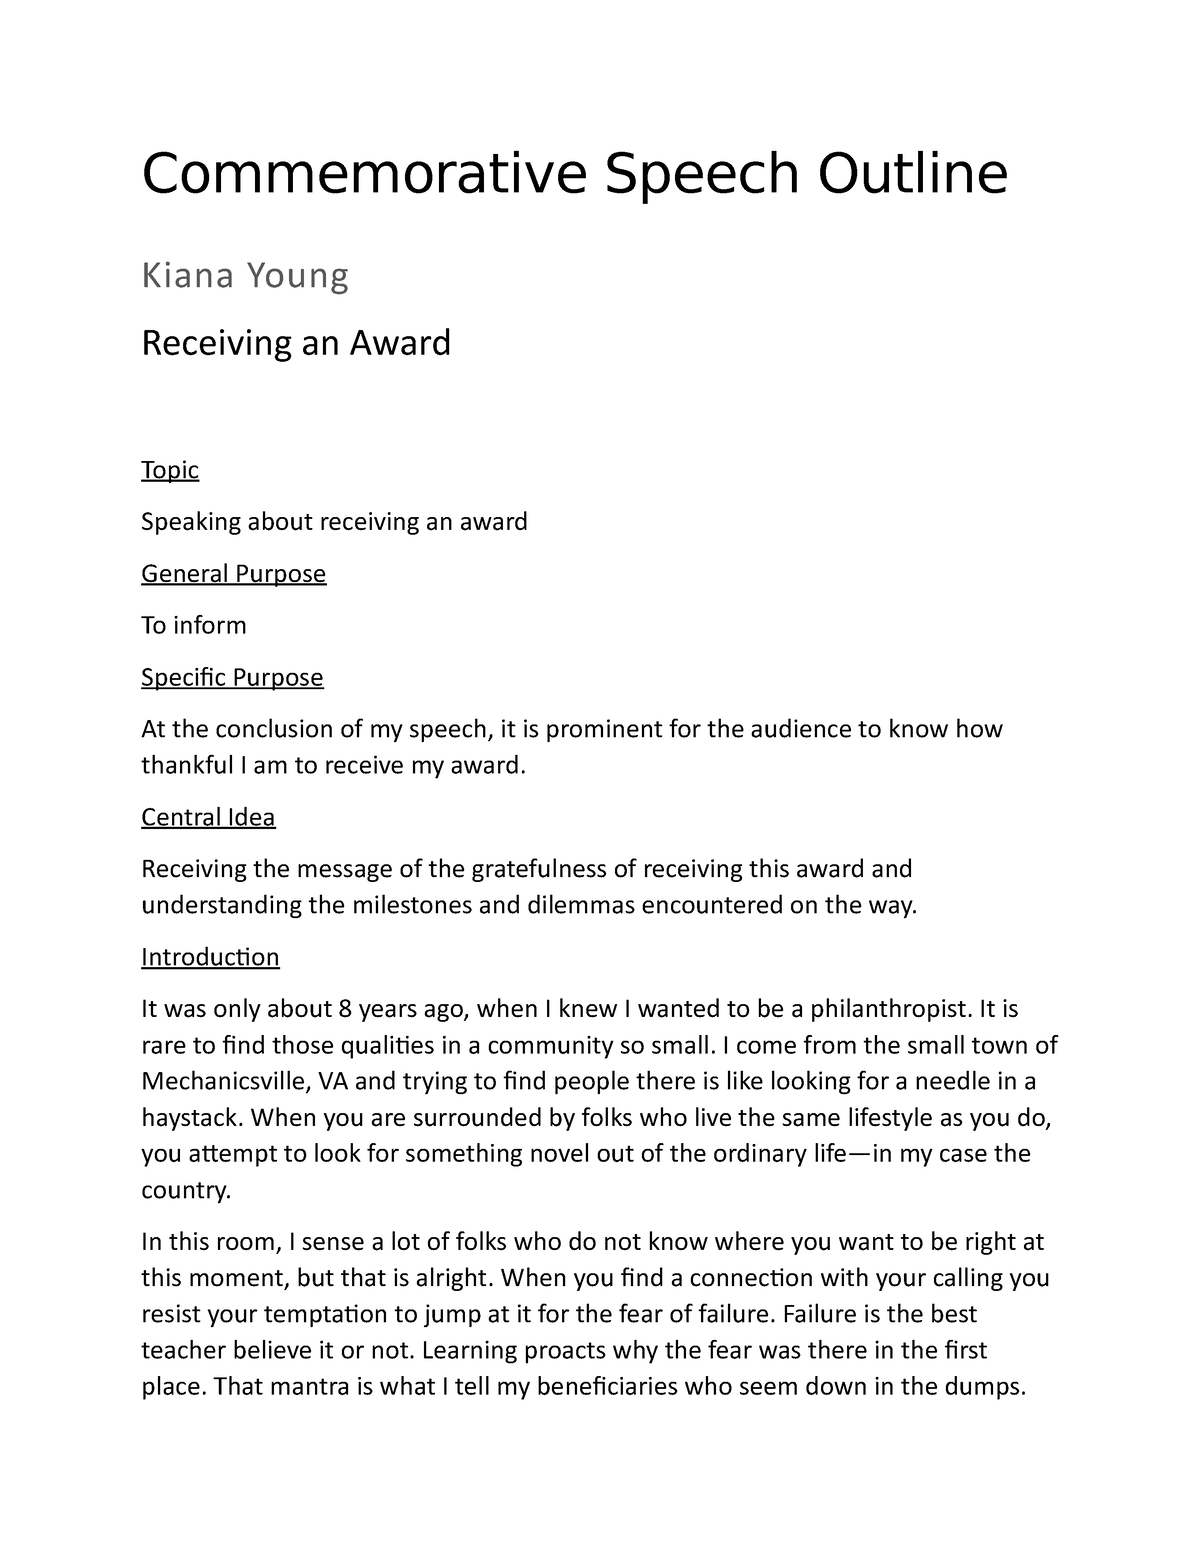 Commemorative Speech Outline Assignment Commemorative Speech Outline Kiana Young Receiving An